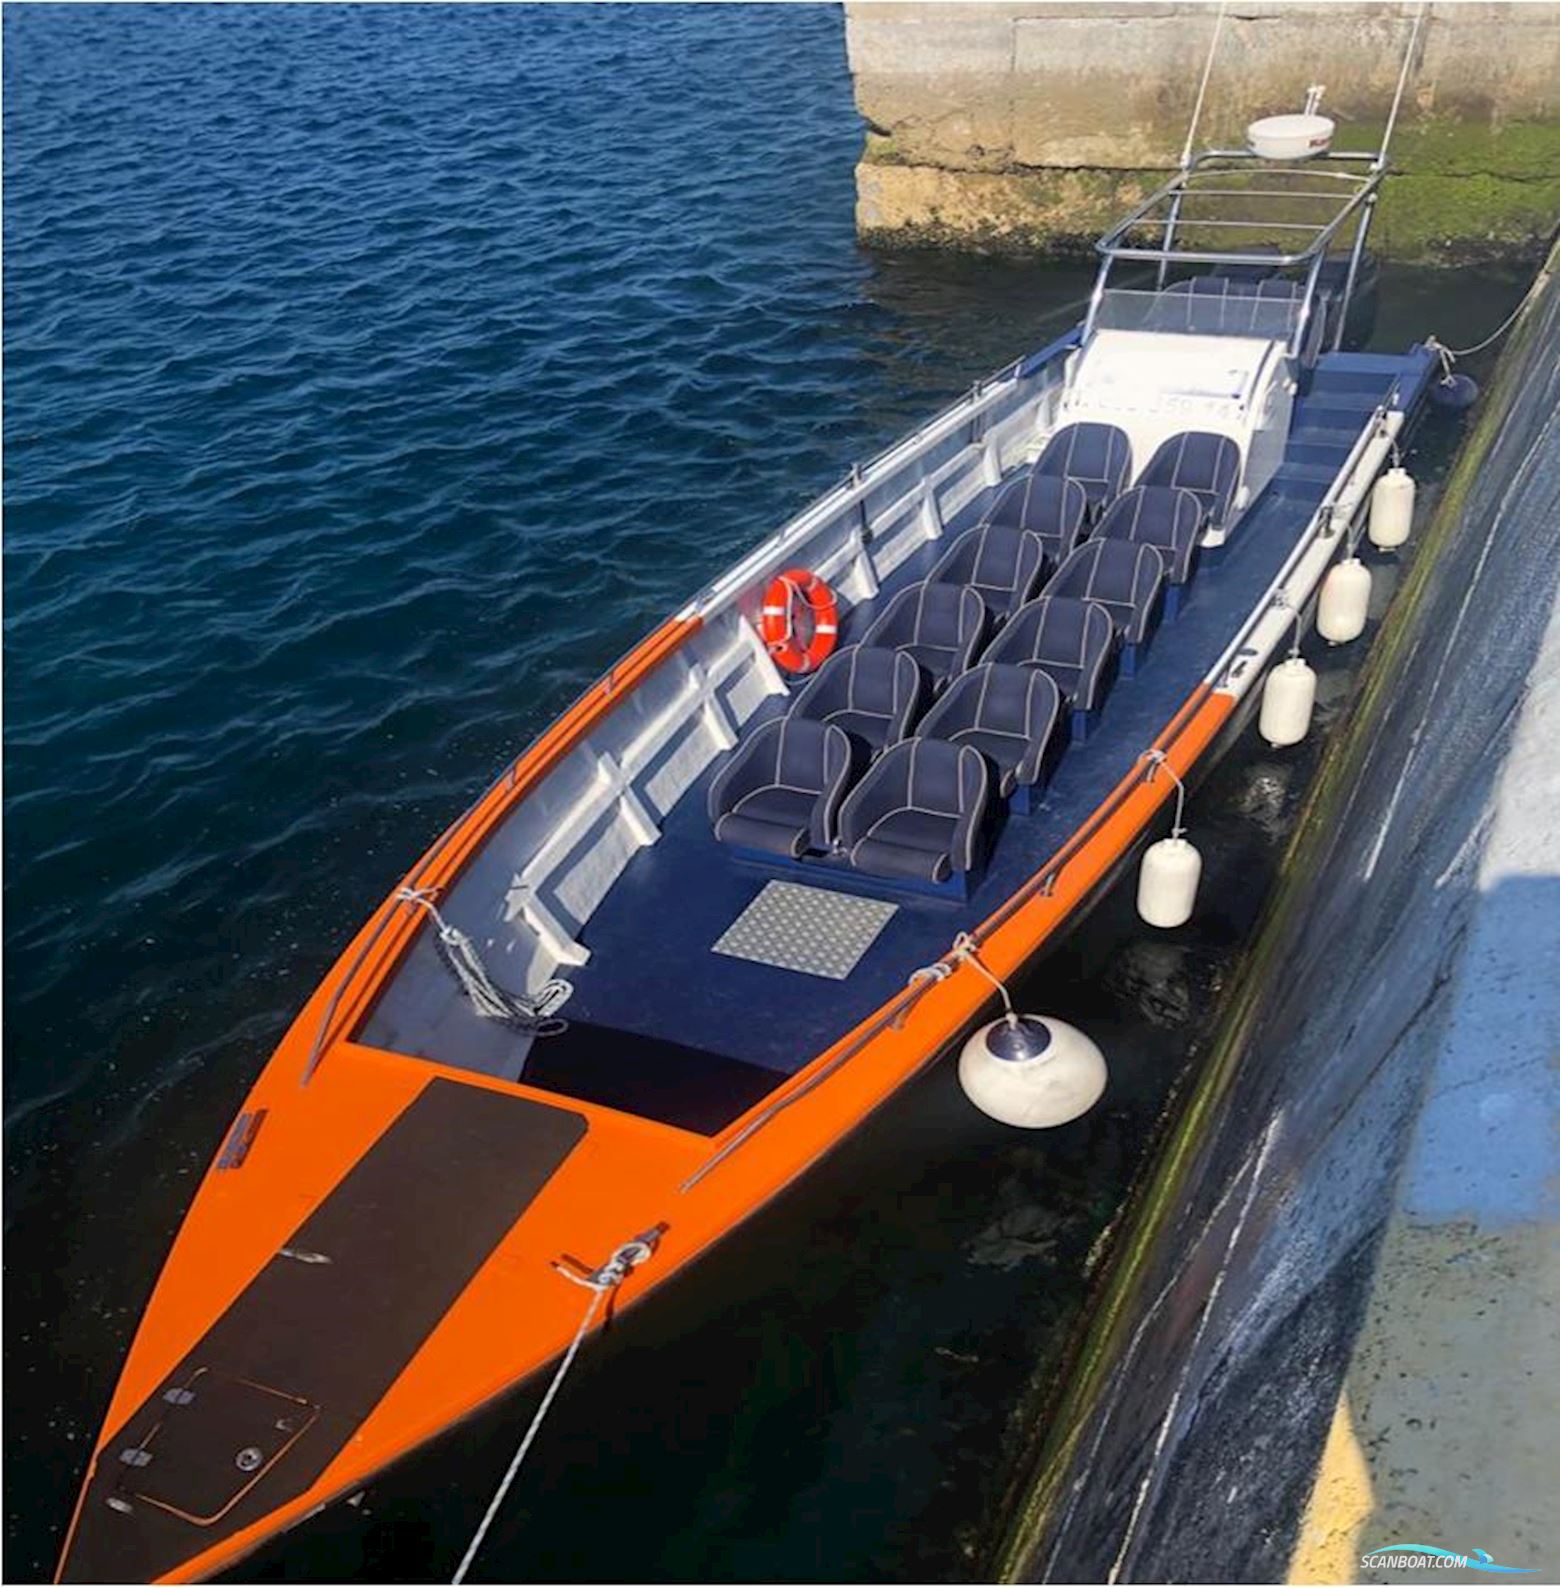 Custom Built Polinautica Speed Motor Boat 1200 Scx Motor boat 2013, with Suzuki engine, Spain